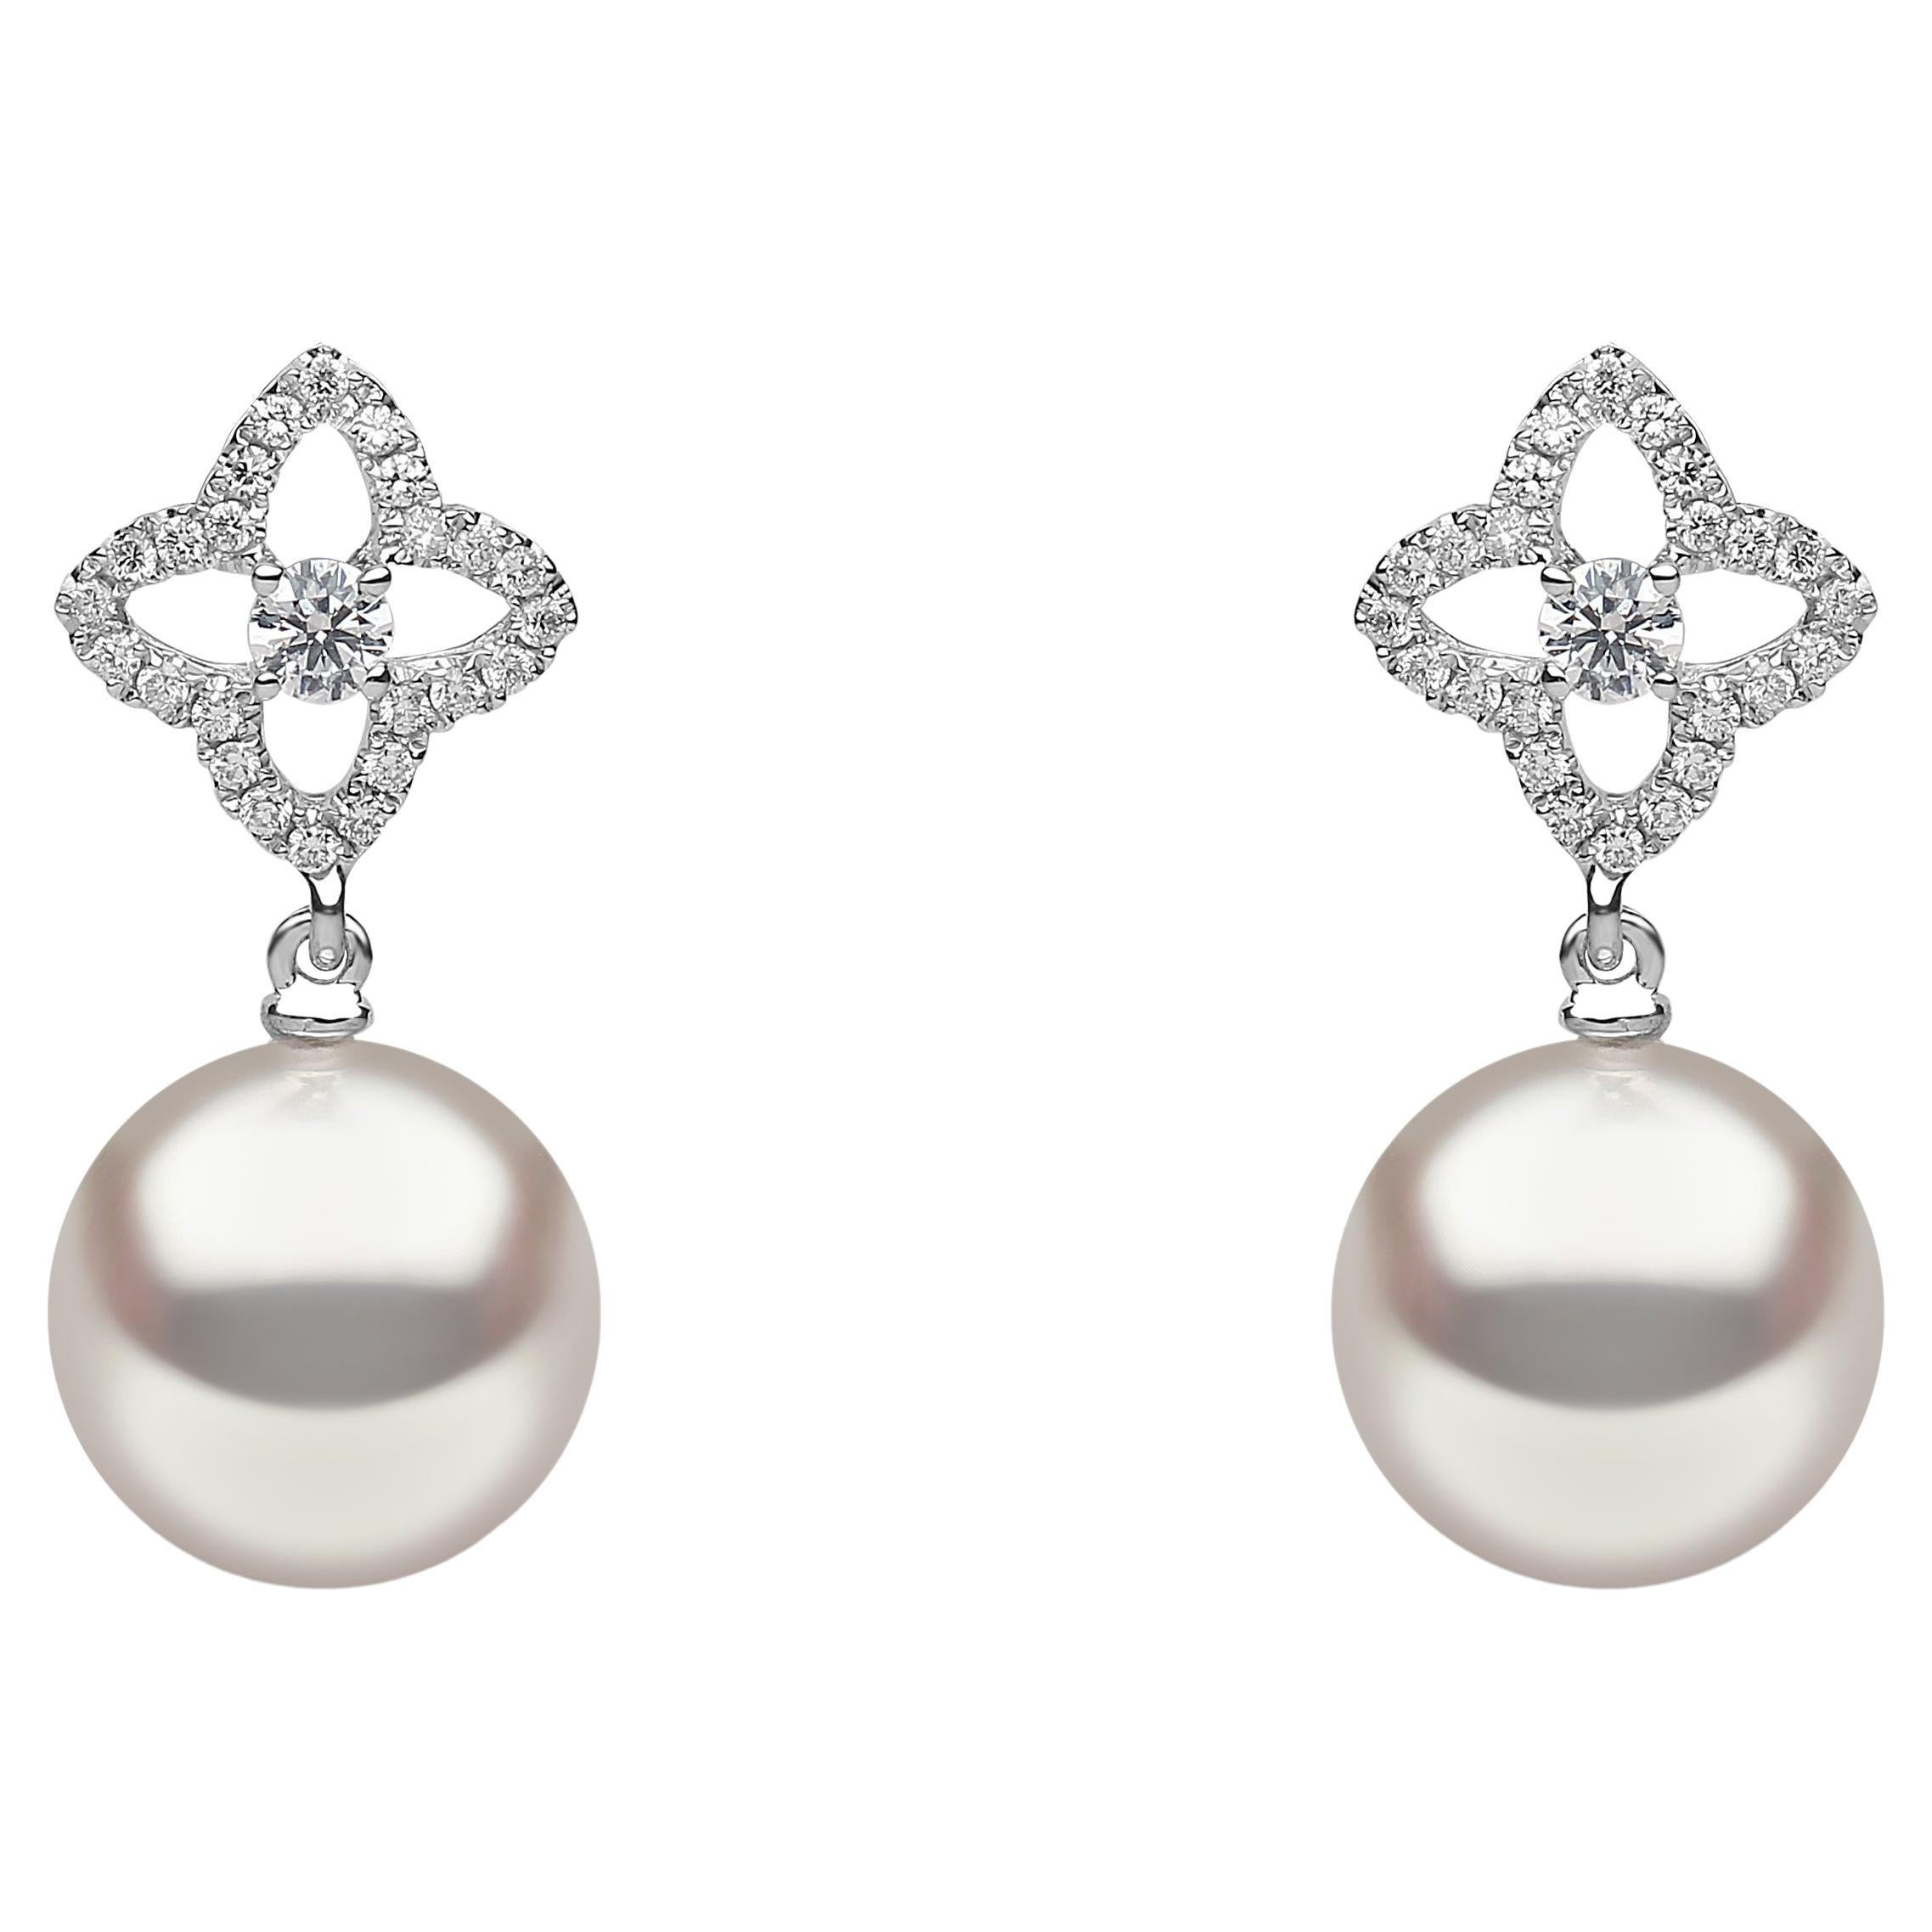 Yoko London South Sea Pearl and Diamond Drop Earrings in 18 Karat White Gold For Sale